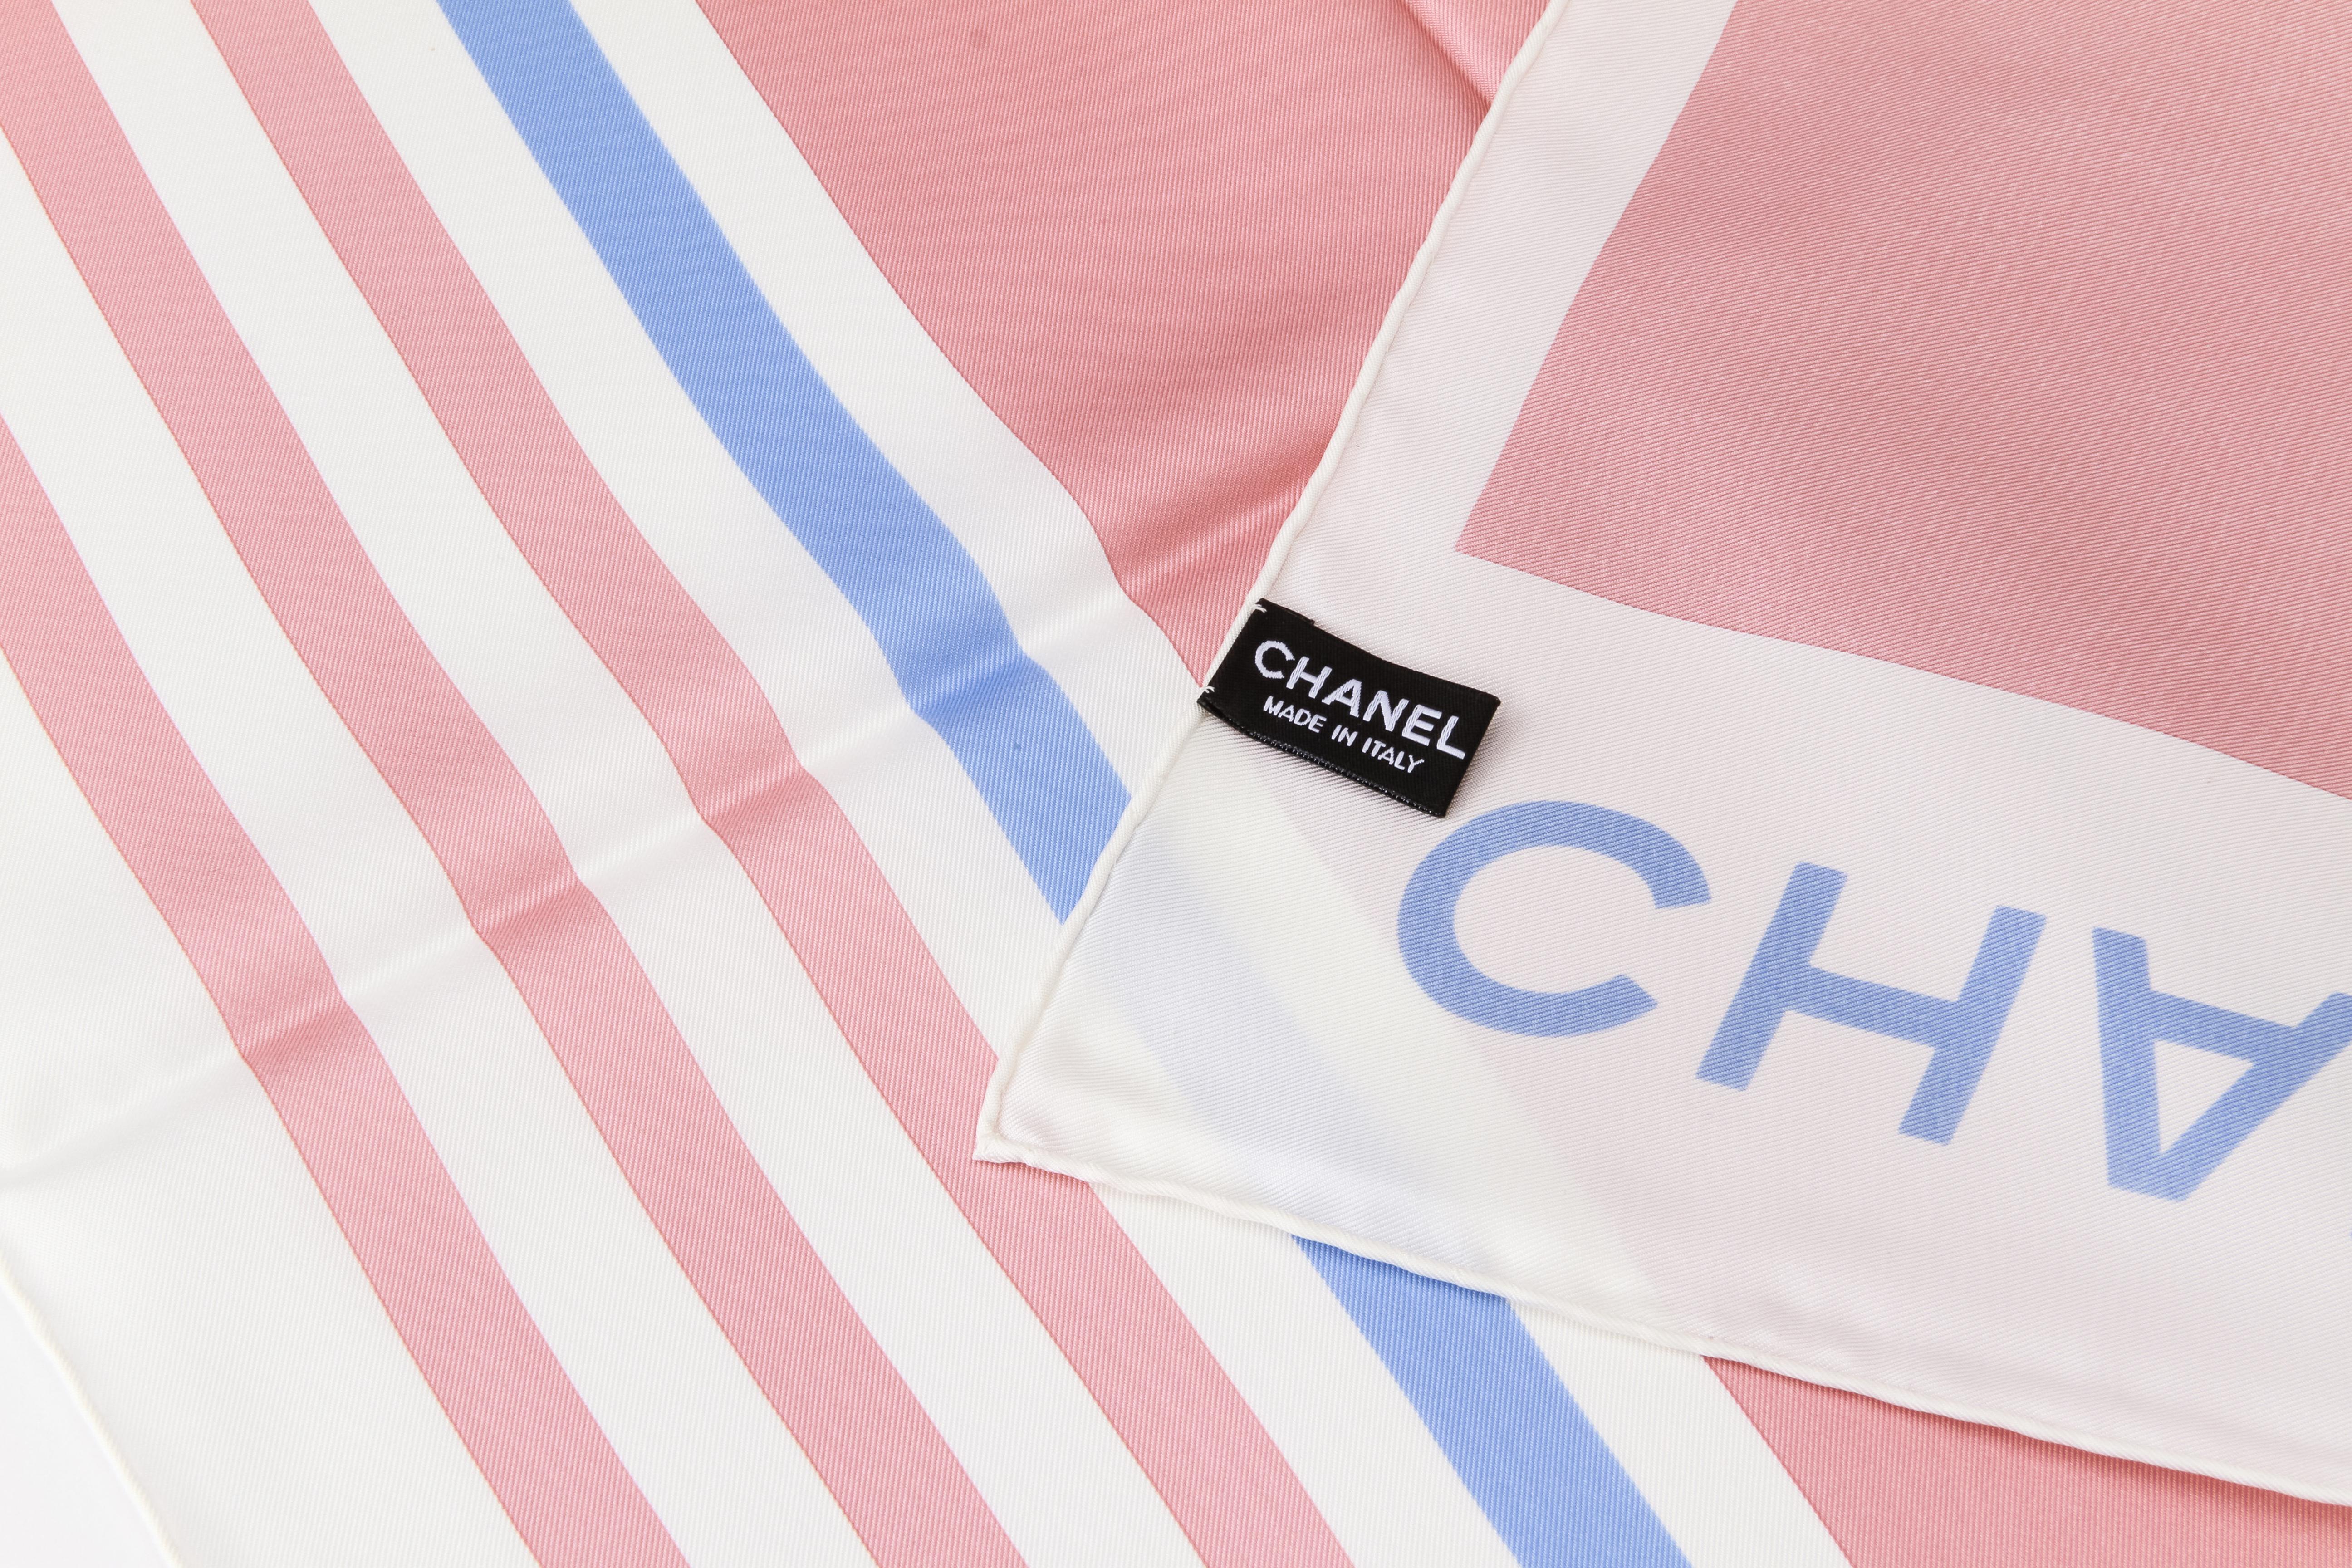 Chanel Cruise Line Pink Silk Scarf
Cruise 2019 scarf
 35